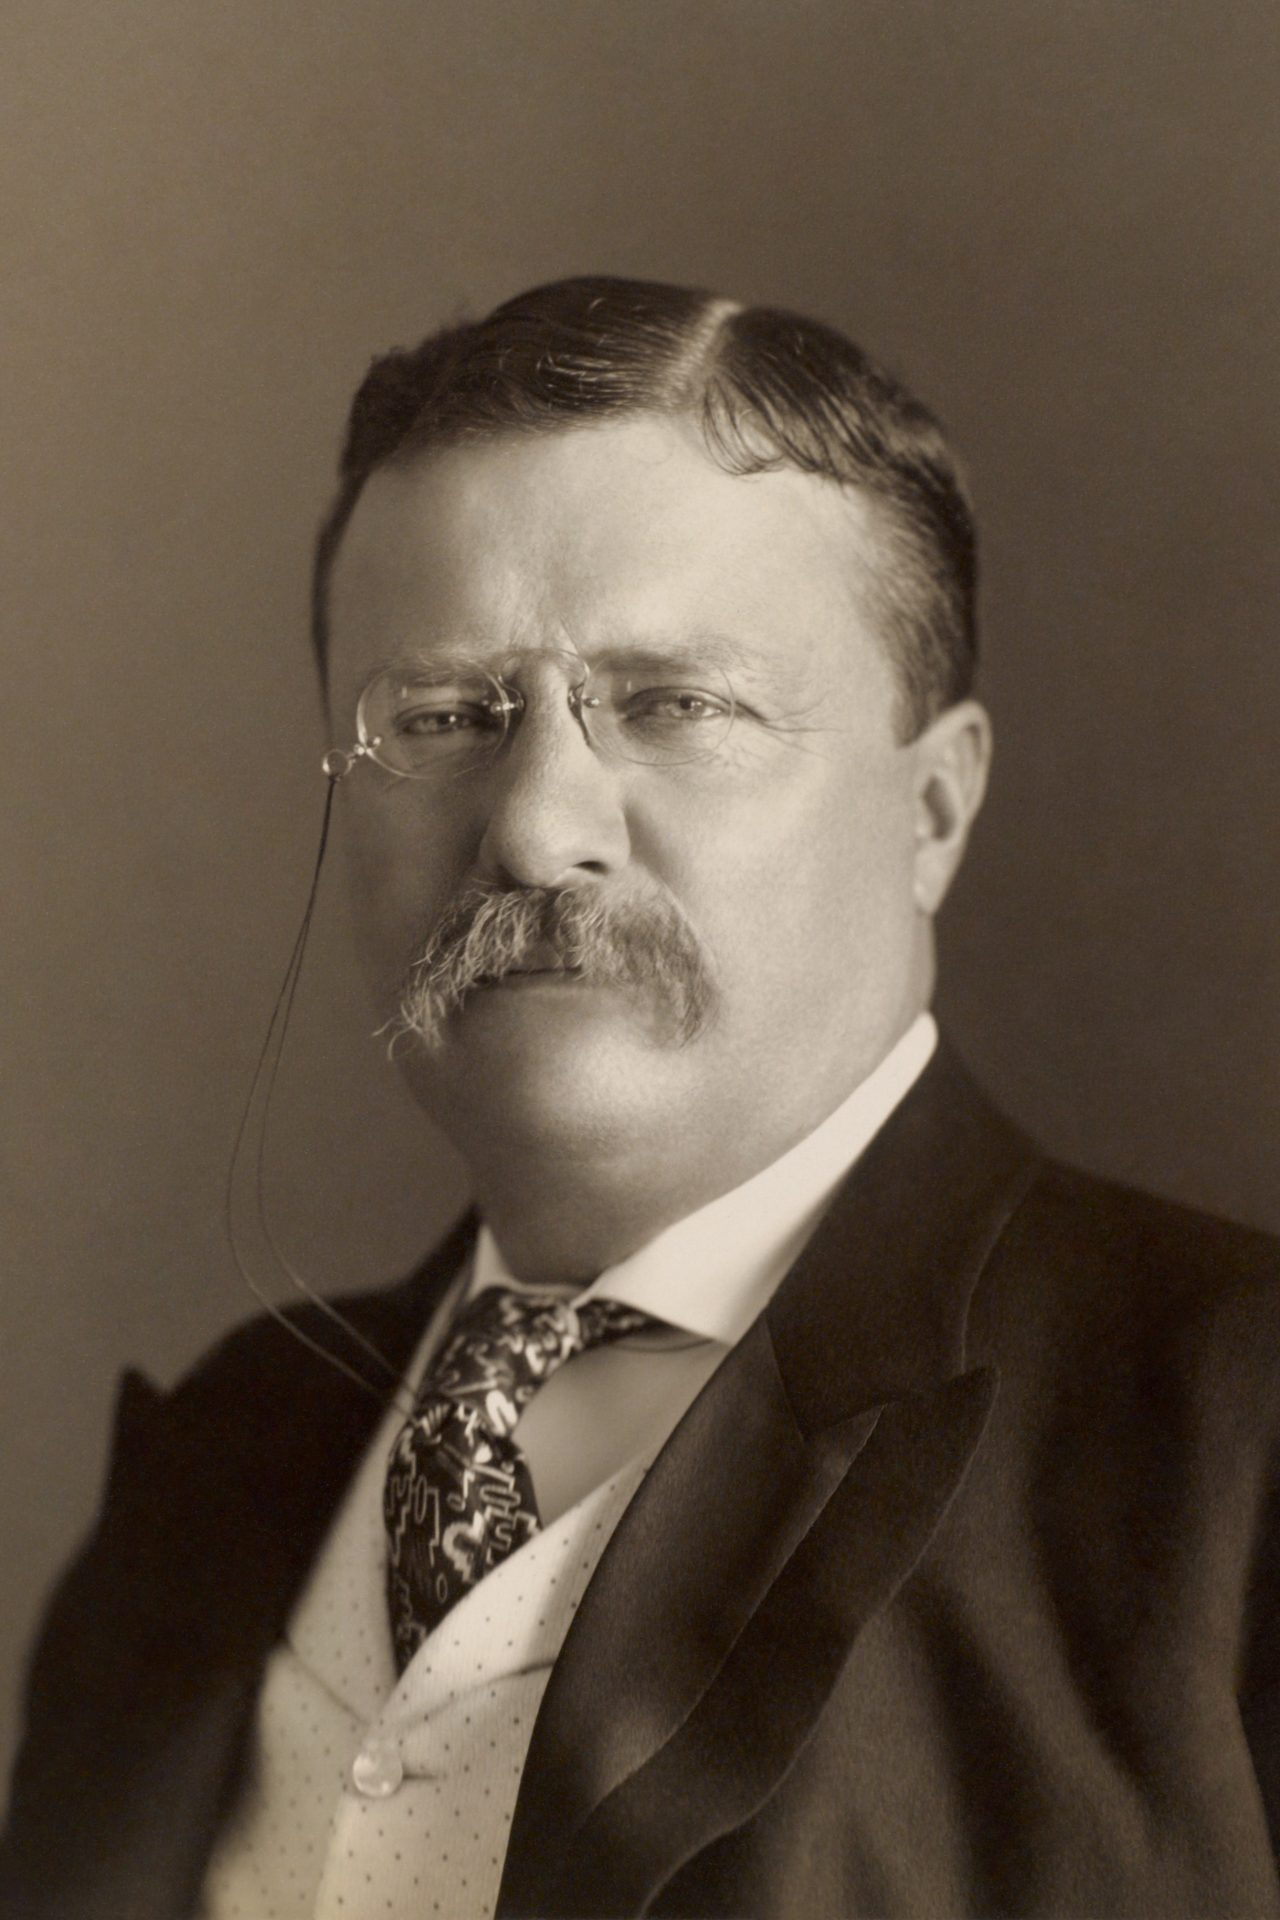 4. Theodore Roosevelt 